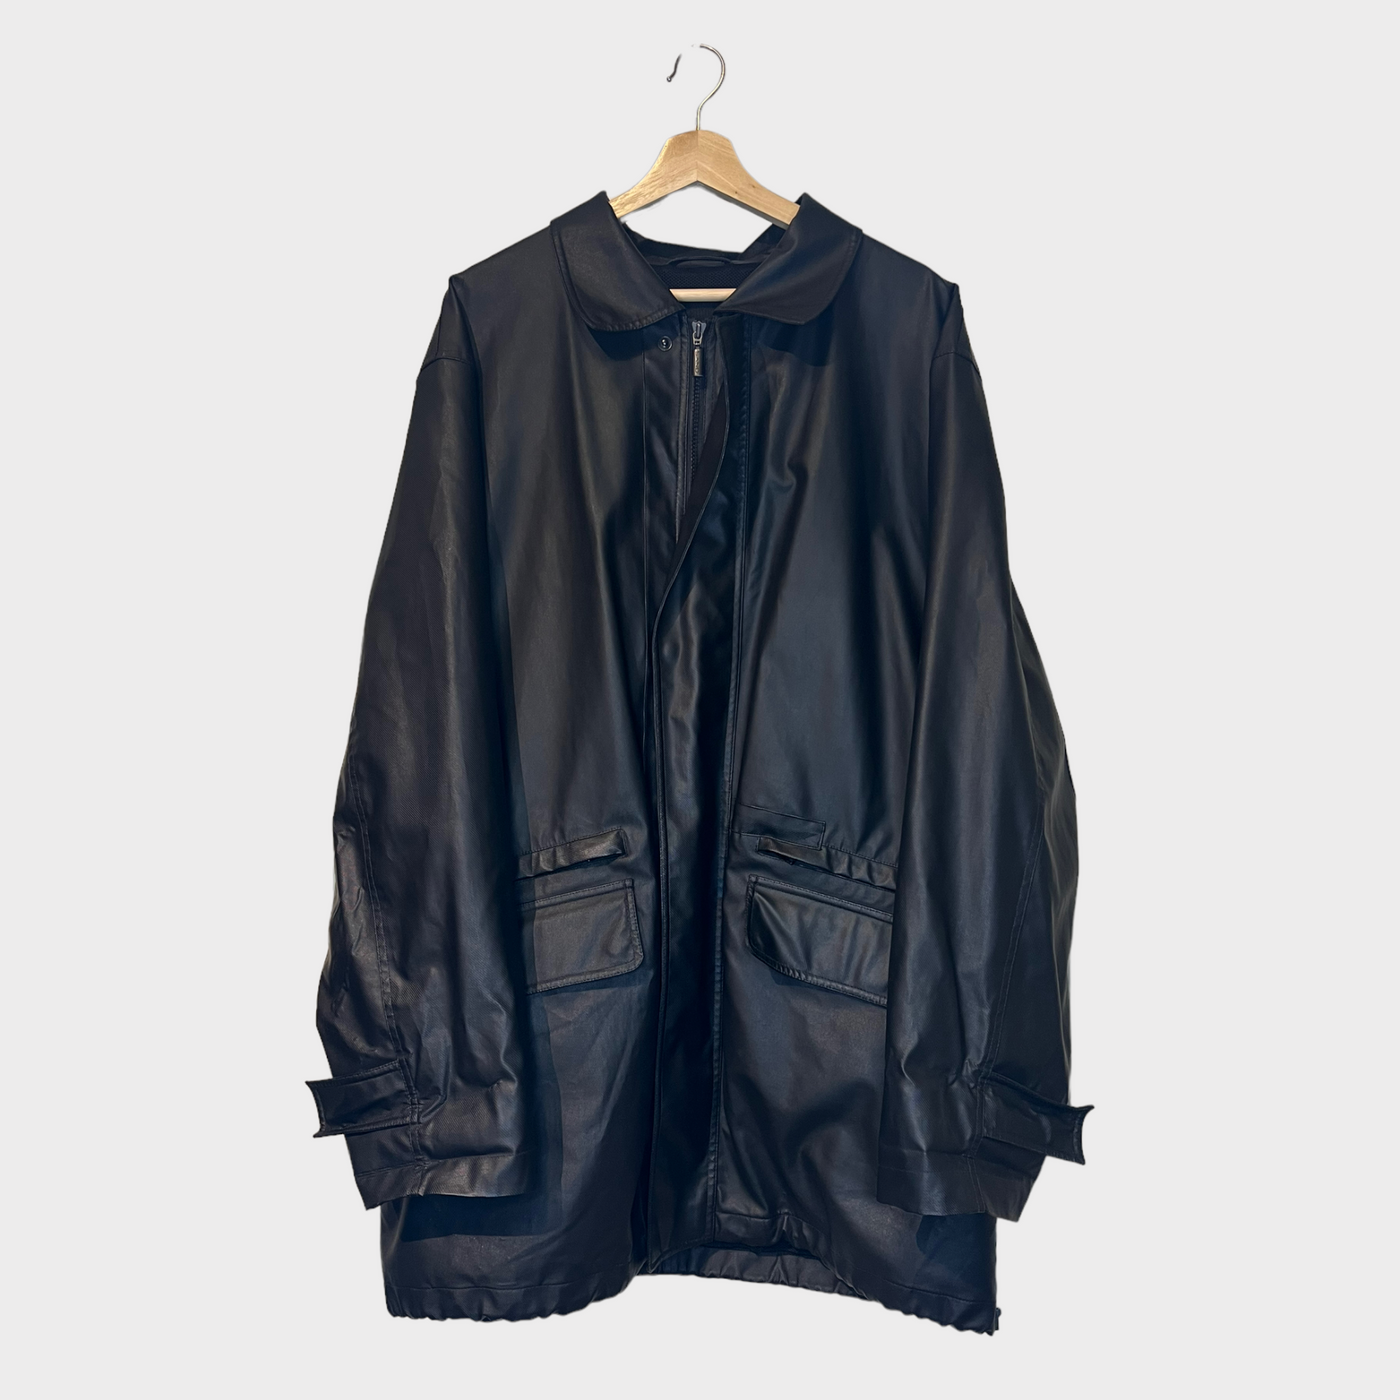 SAND coat jacket - Front